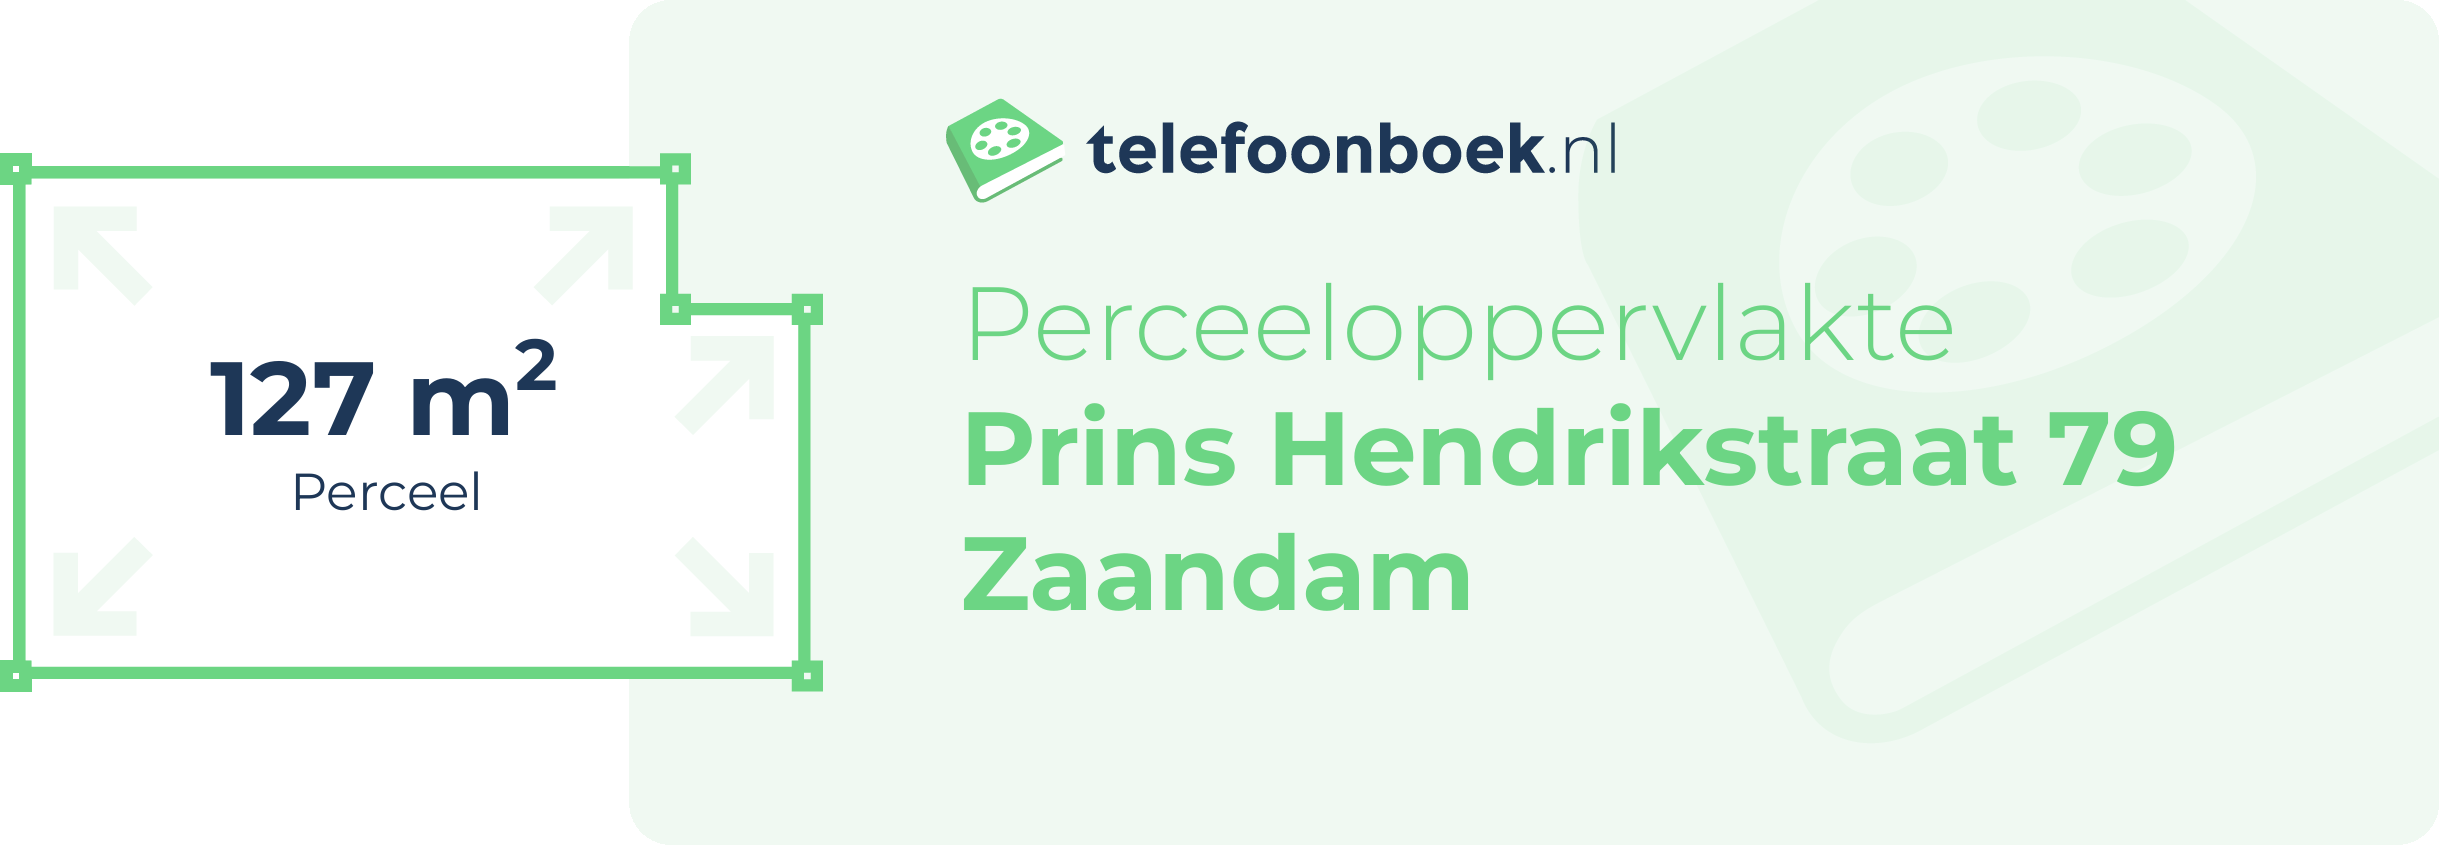 Perceeloppervlakte Prins Hendrikstraat 79 Zaandam